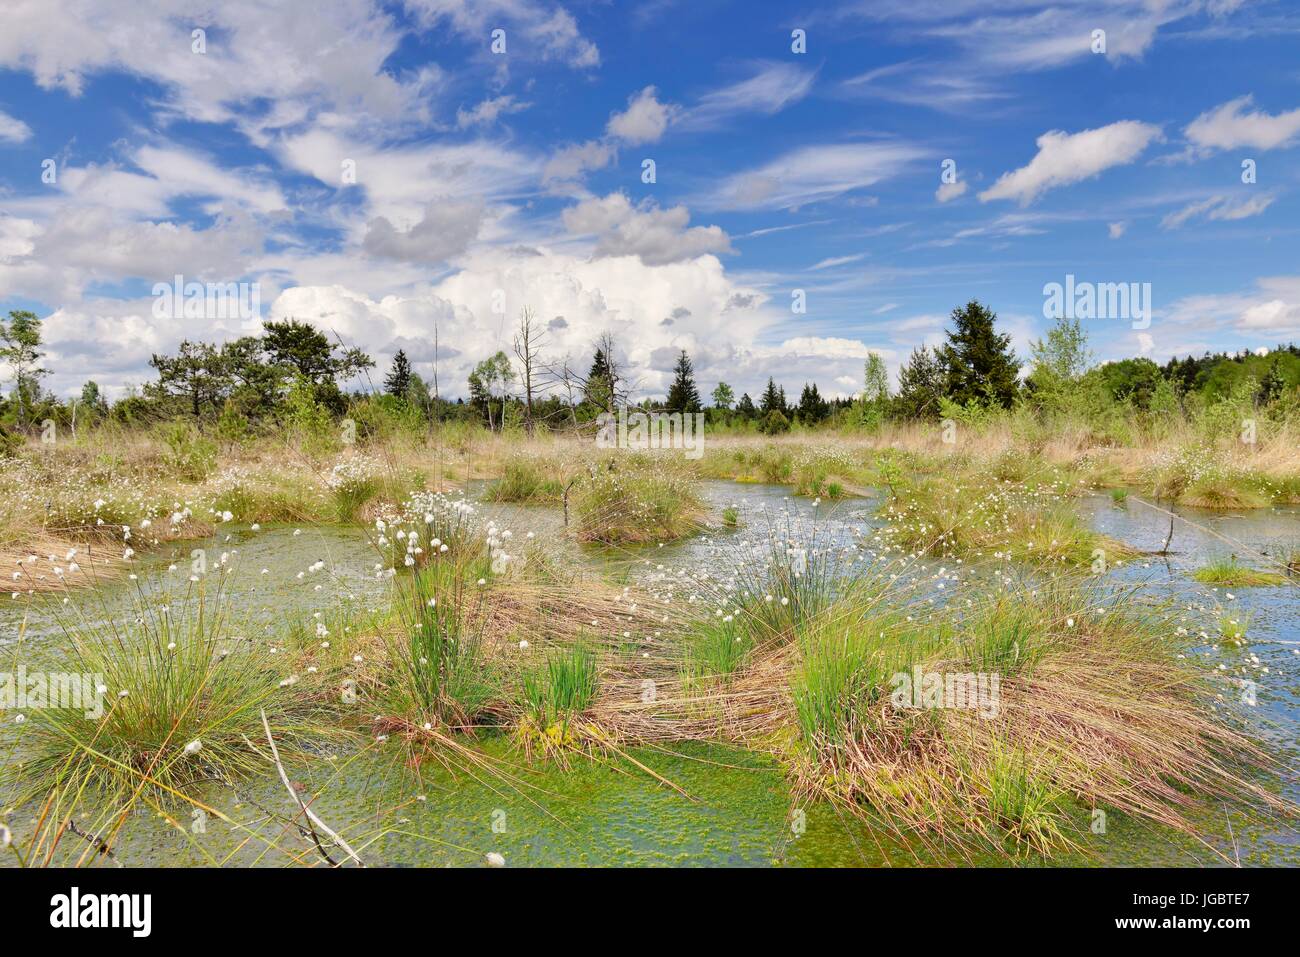 Hare's-tail cottongrass (Eriophorum vaginatum) in wet moorland with peat moss (Sphagnum sp.), Nicklheim, Bavaria, Germany Stock Photo